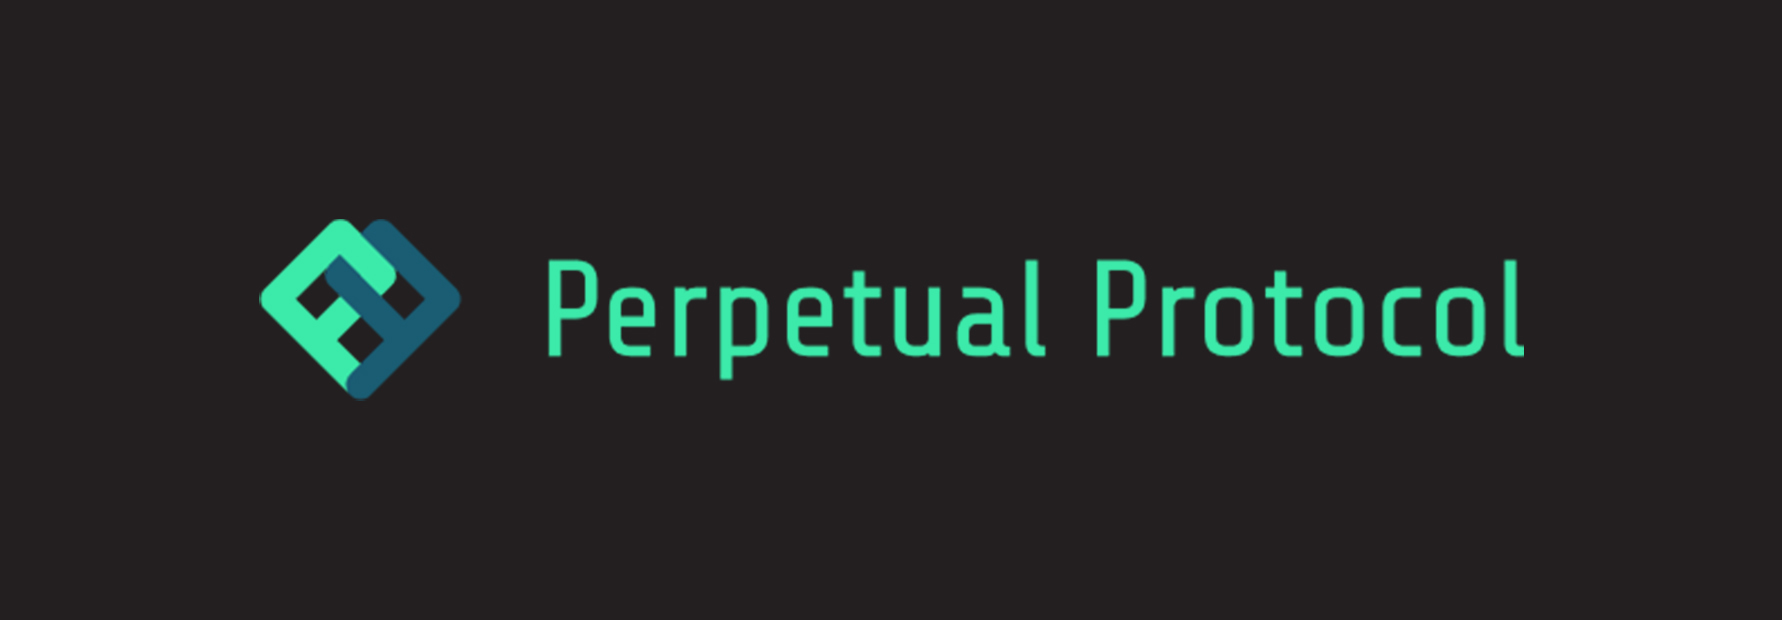 perpetual_protocol-logo.jpg